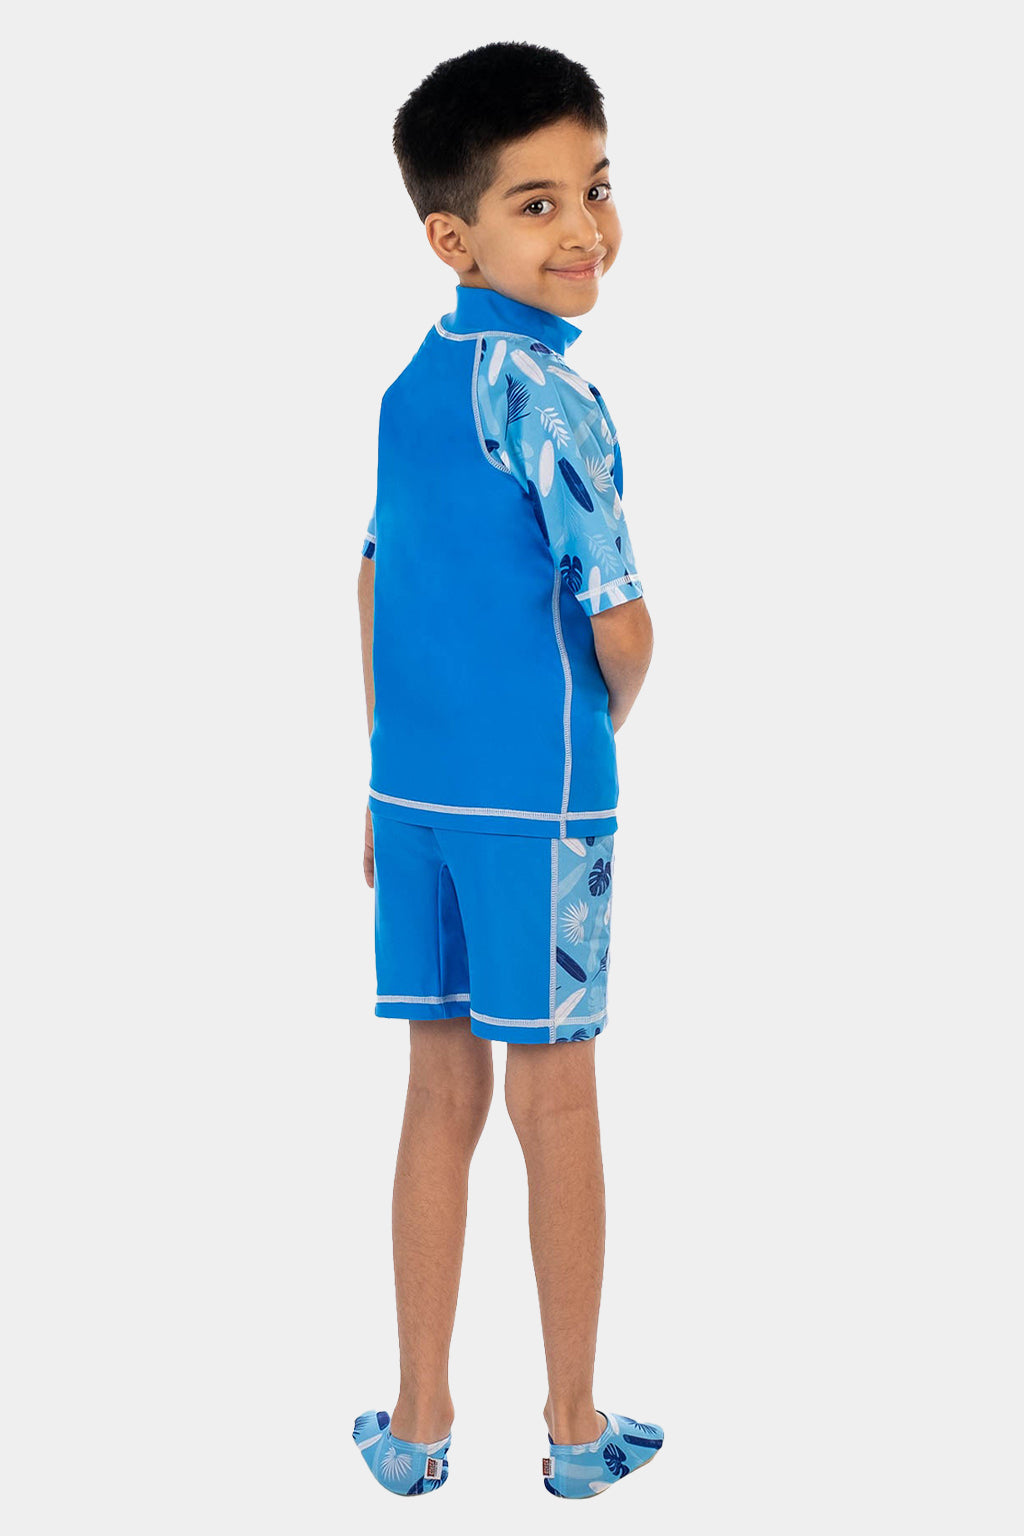 Coega - Boys Kids Swim Suit Two Piece